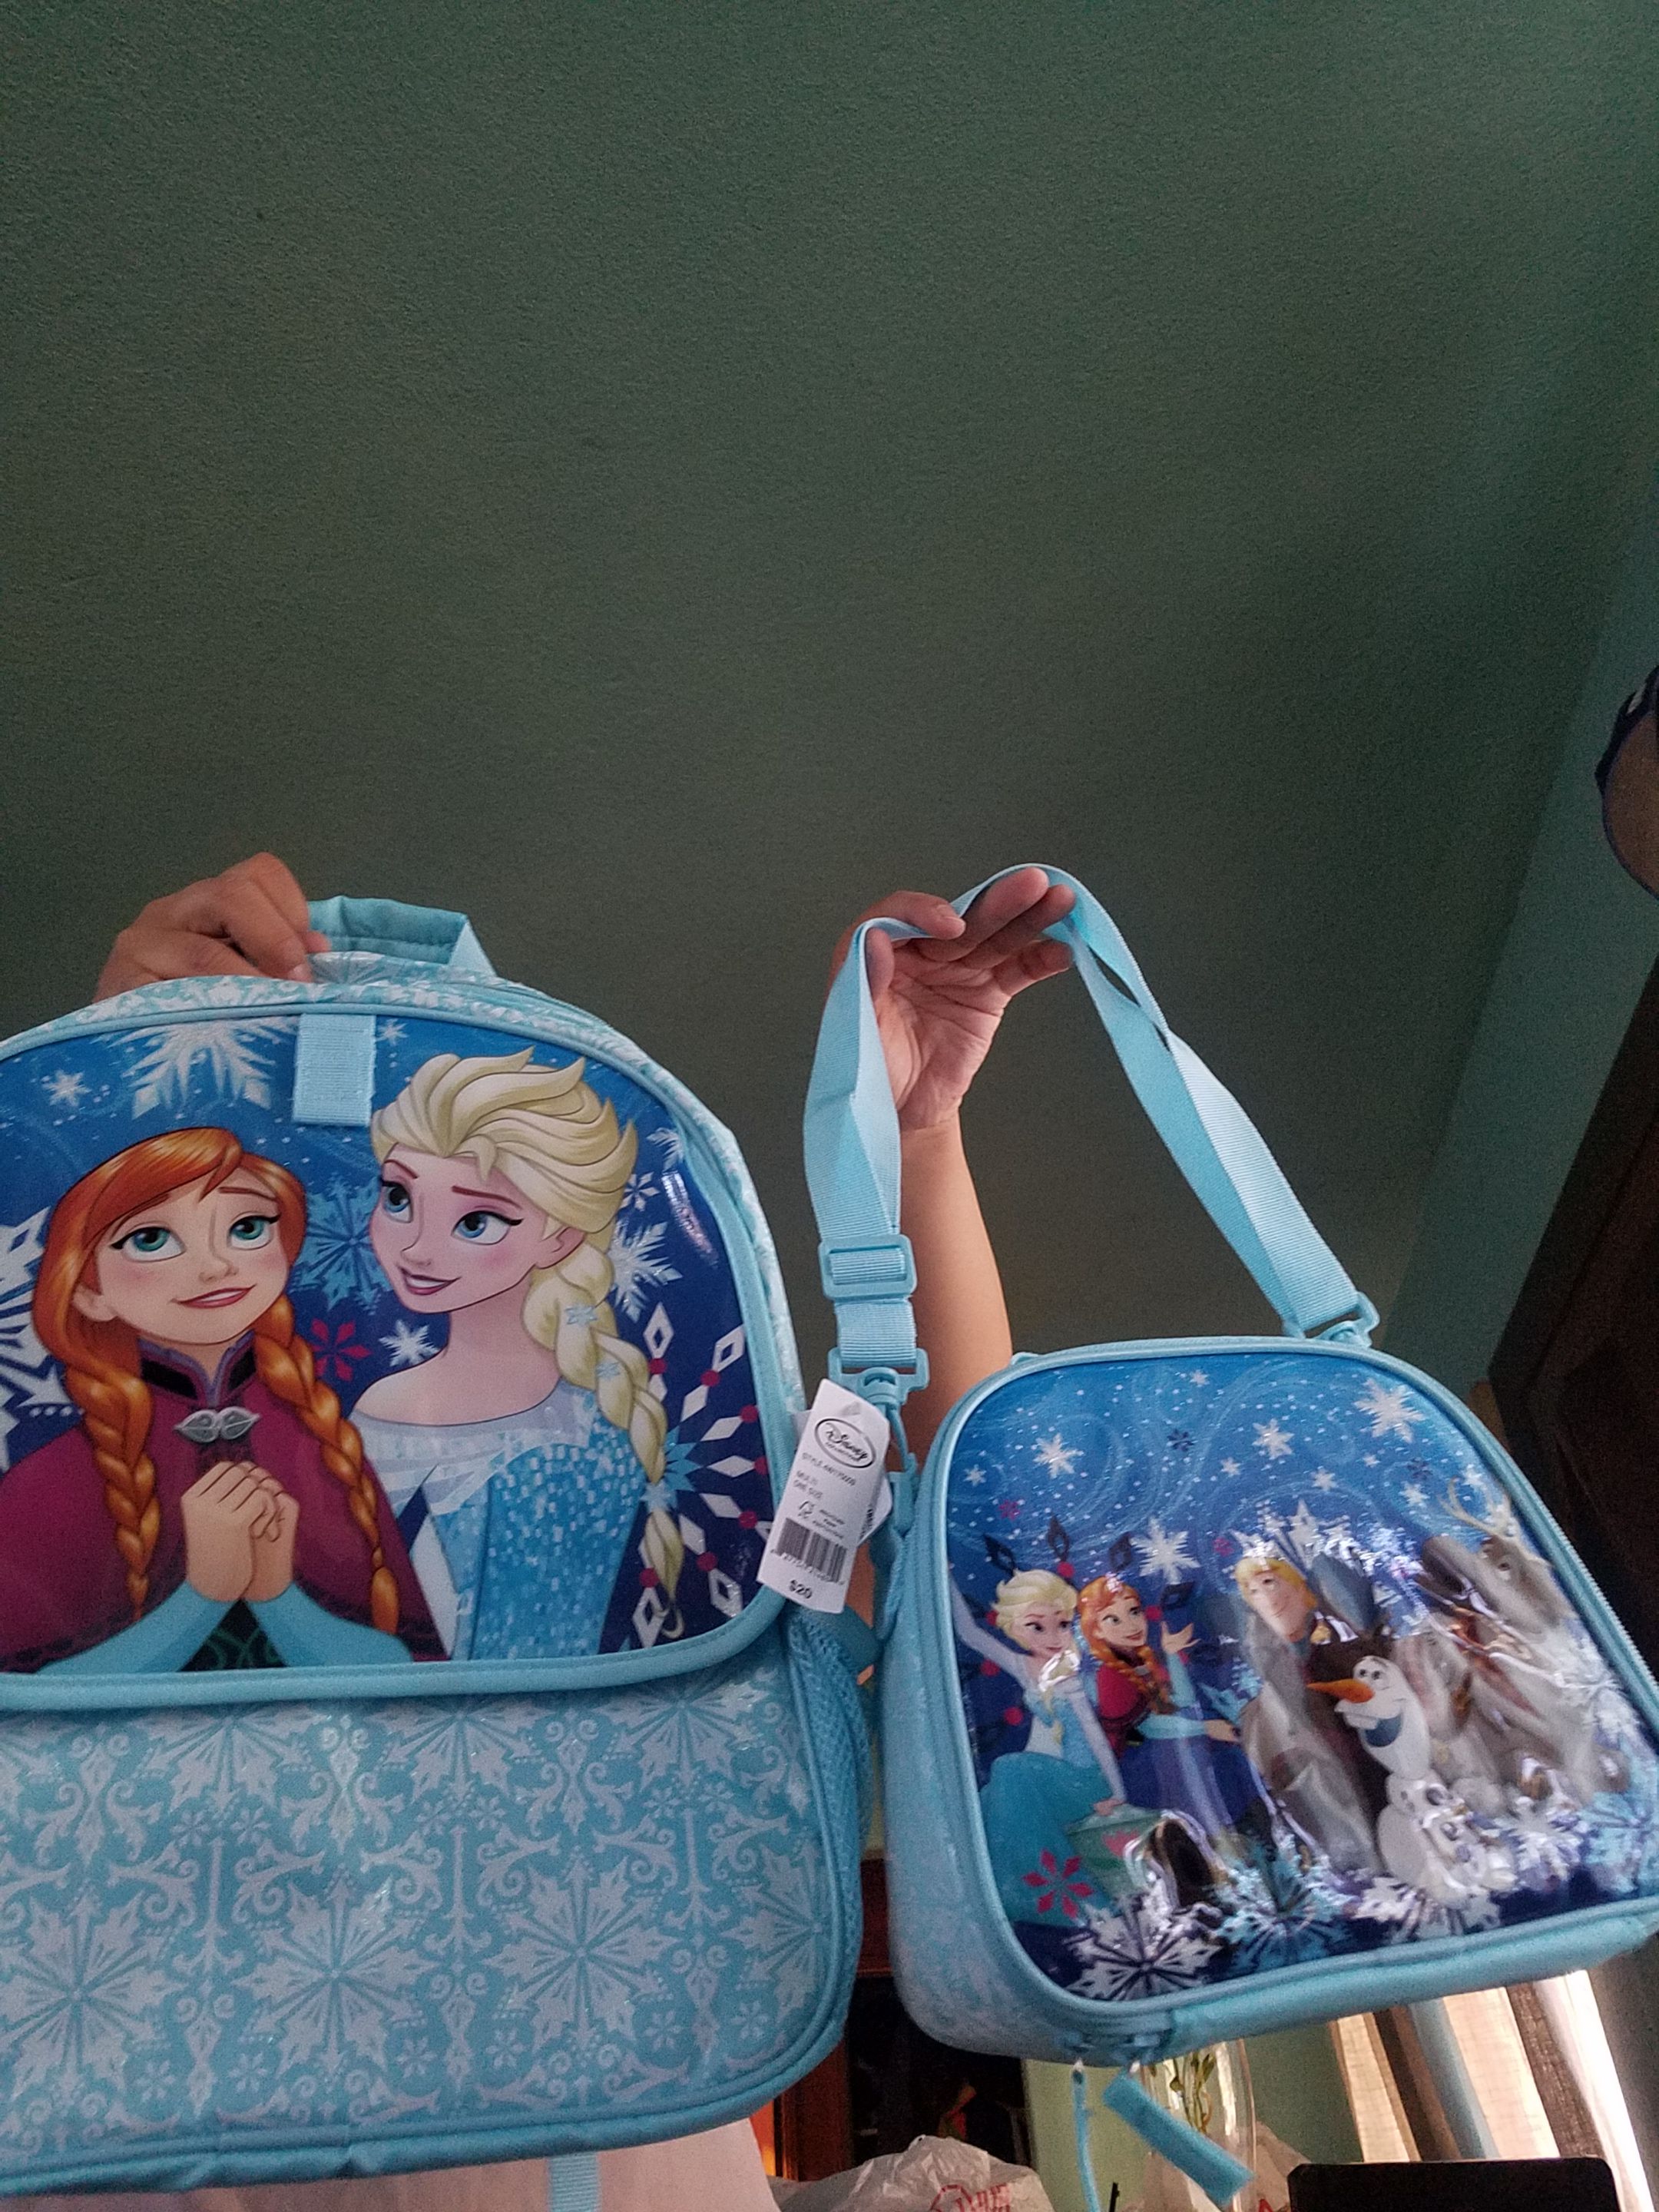 Disney backpacks